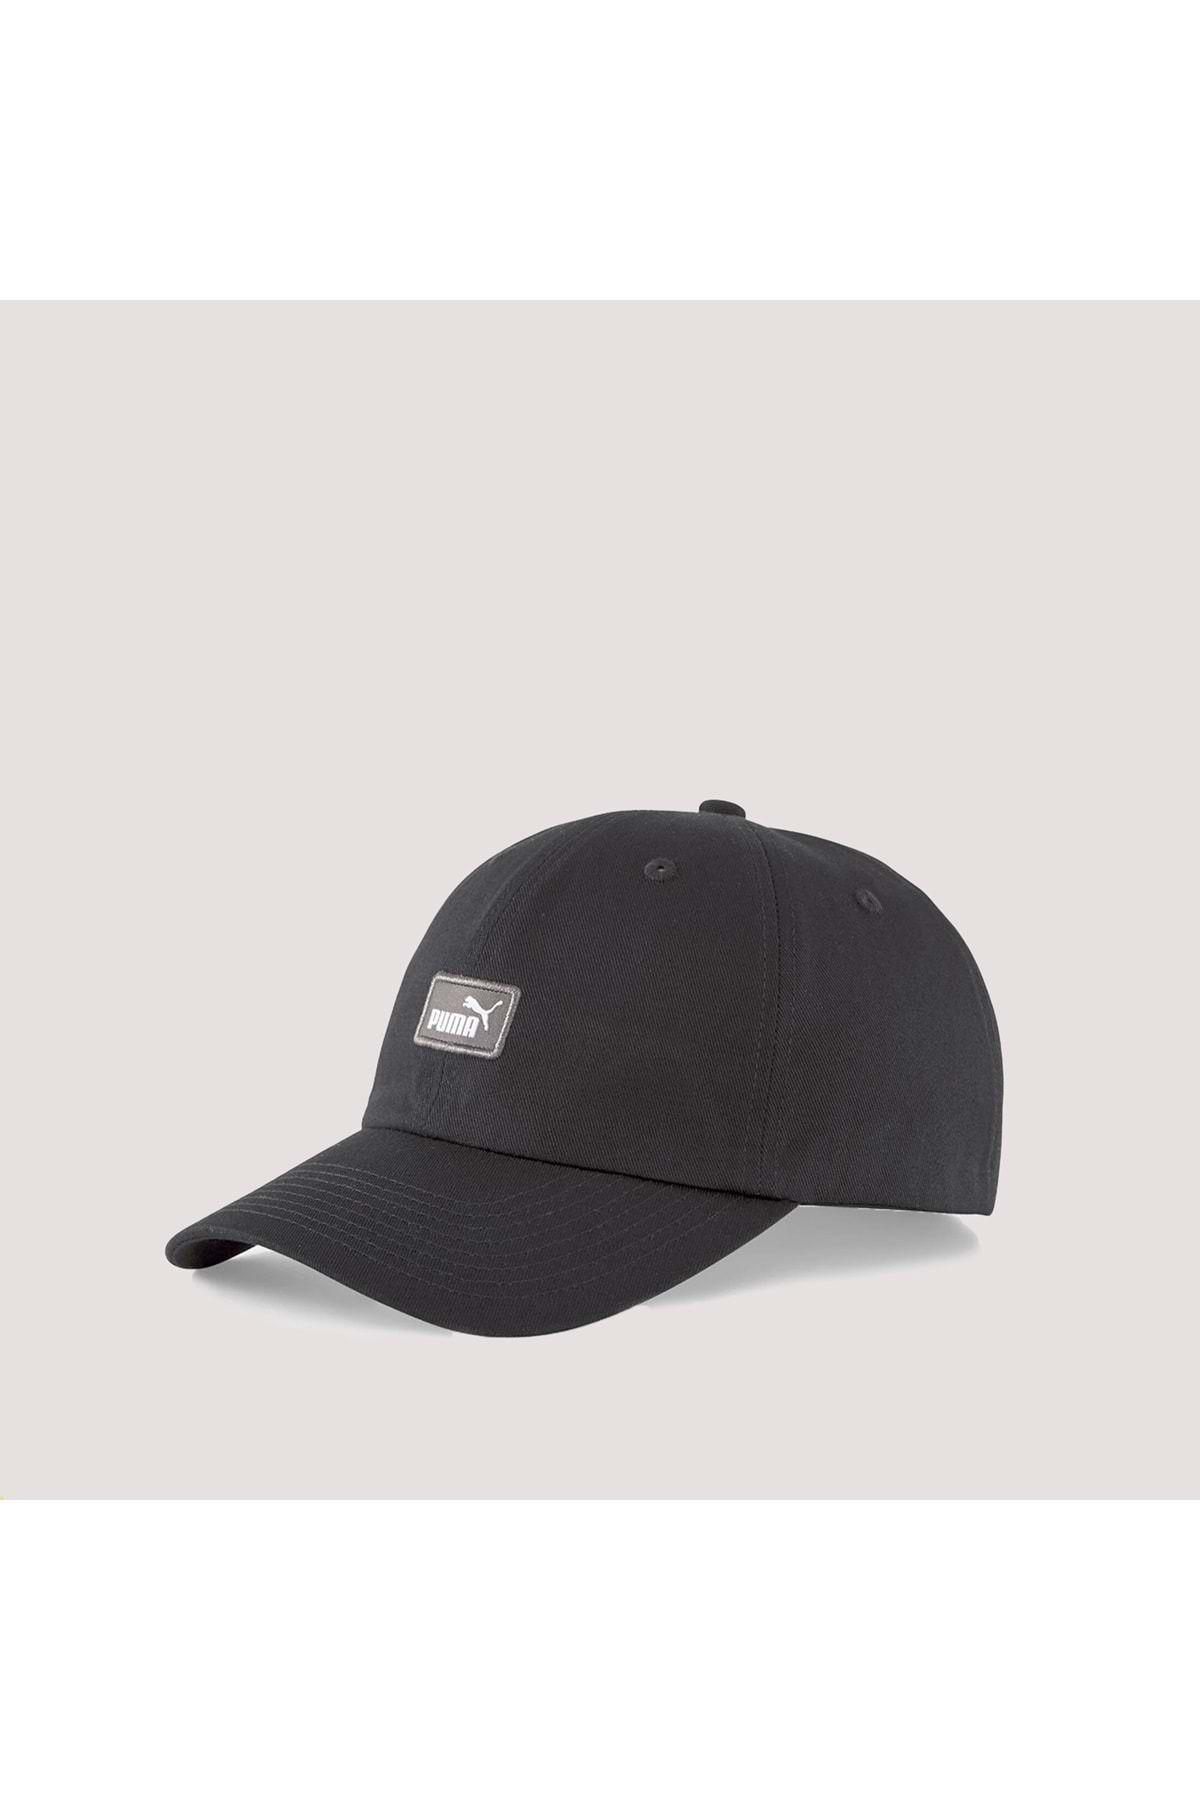 Puma Ess Cap Iıı Unisex Şapka - Siyah - Standart